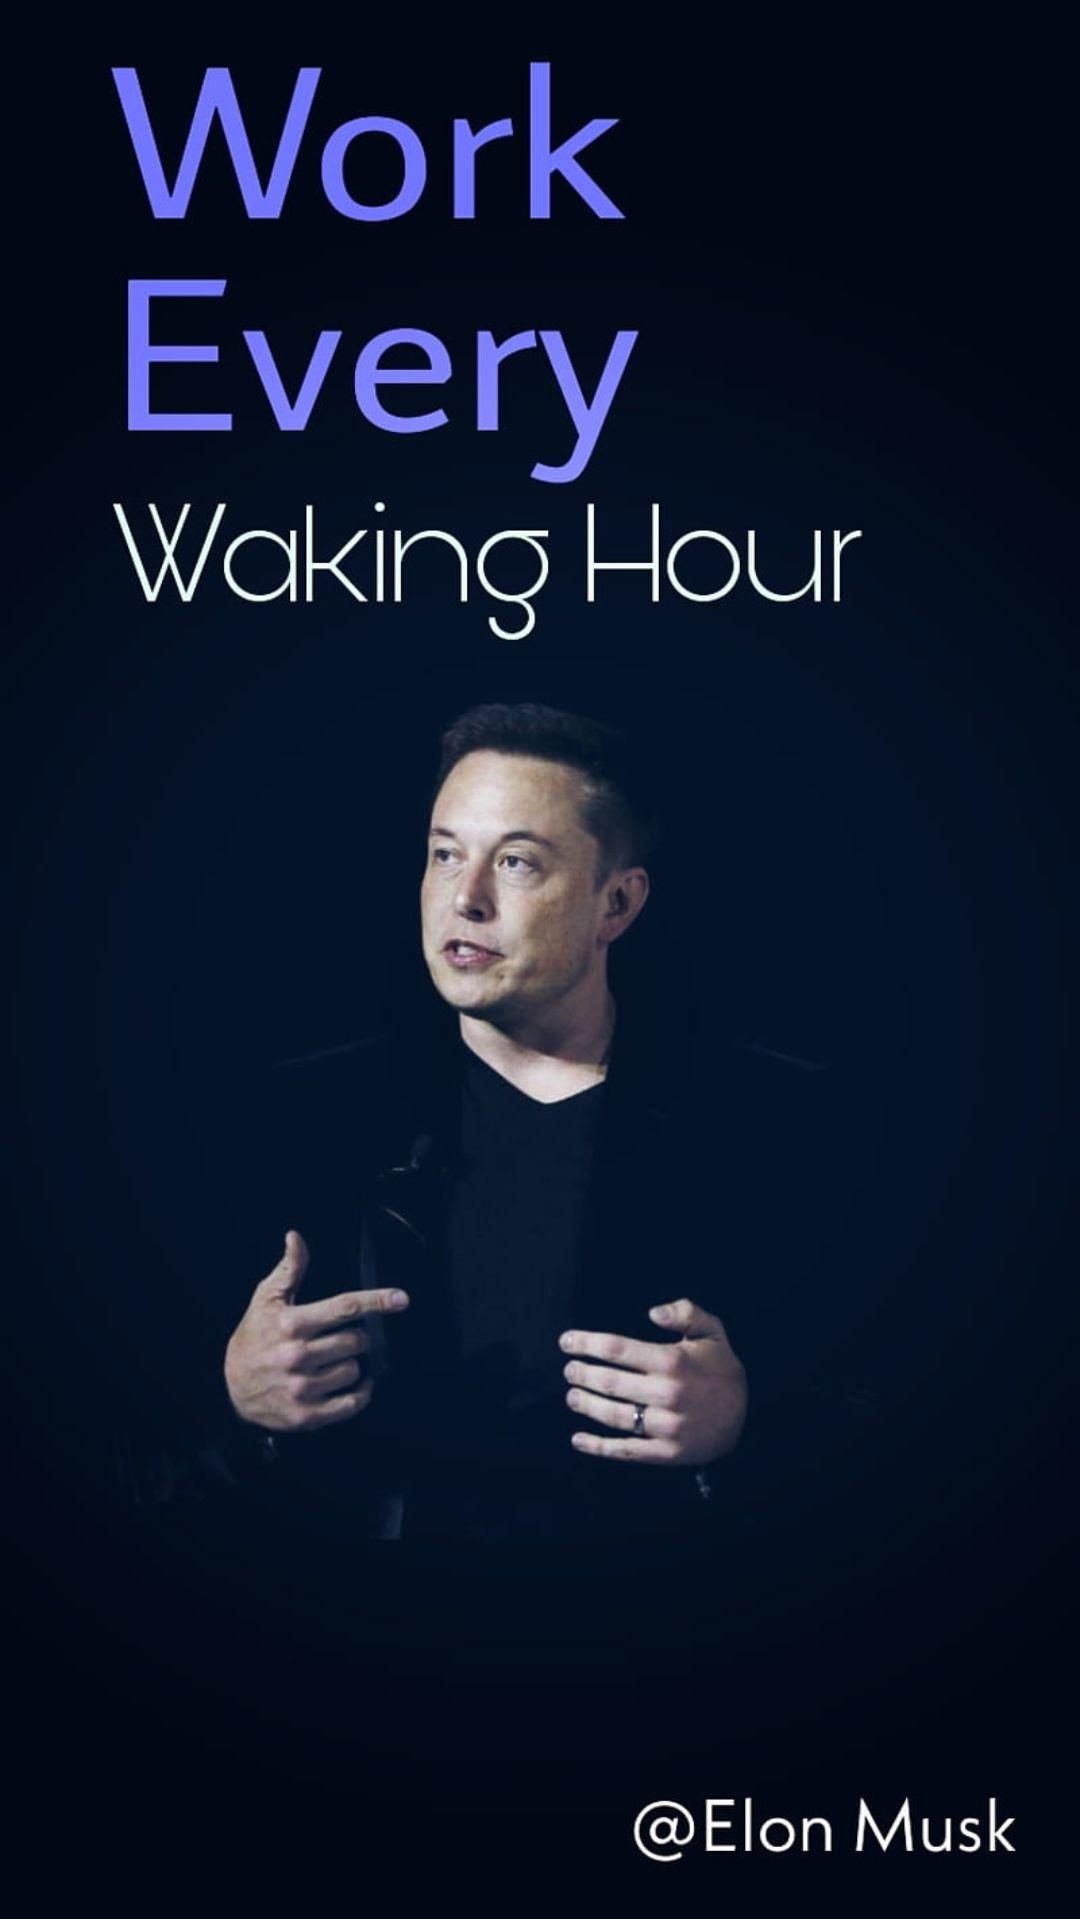 Elon Musk Wallpapers Top Best Elon Musk Backgrounds Download